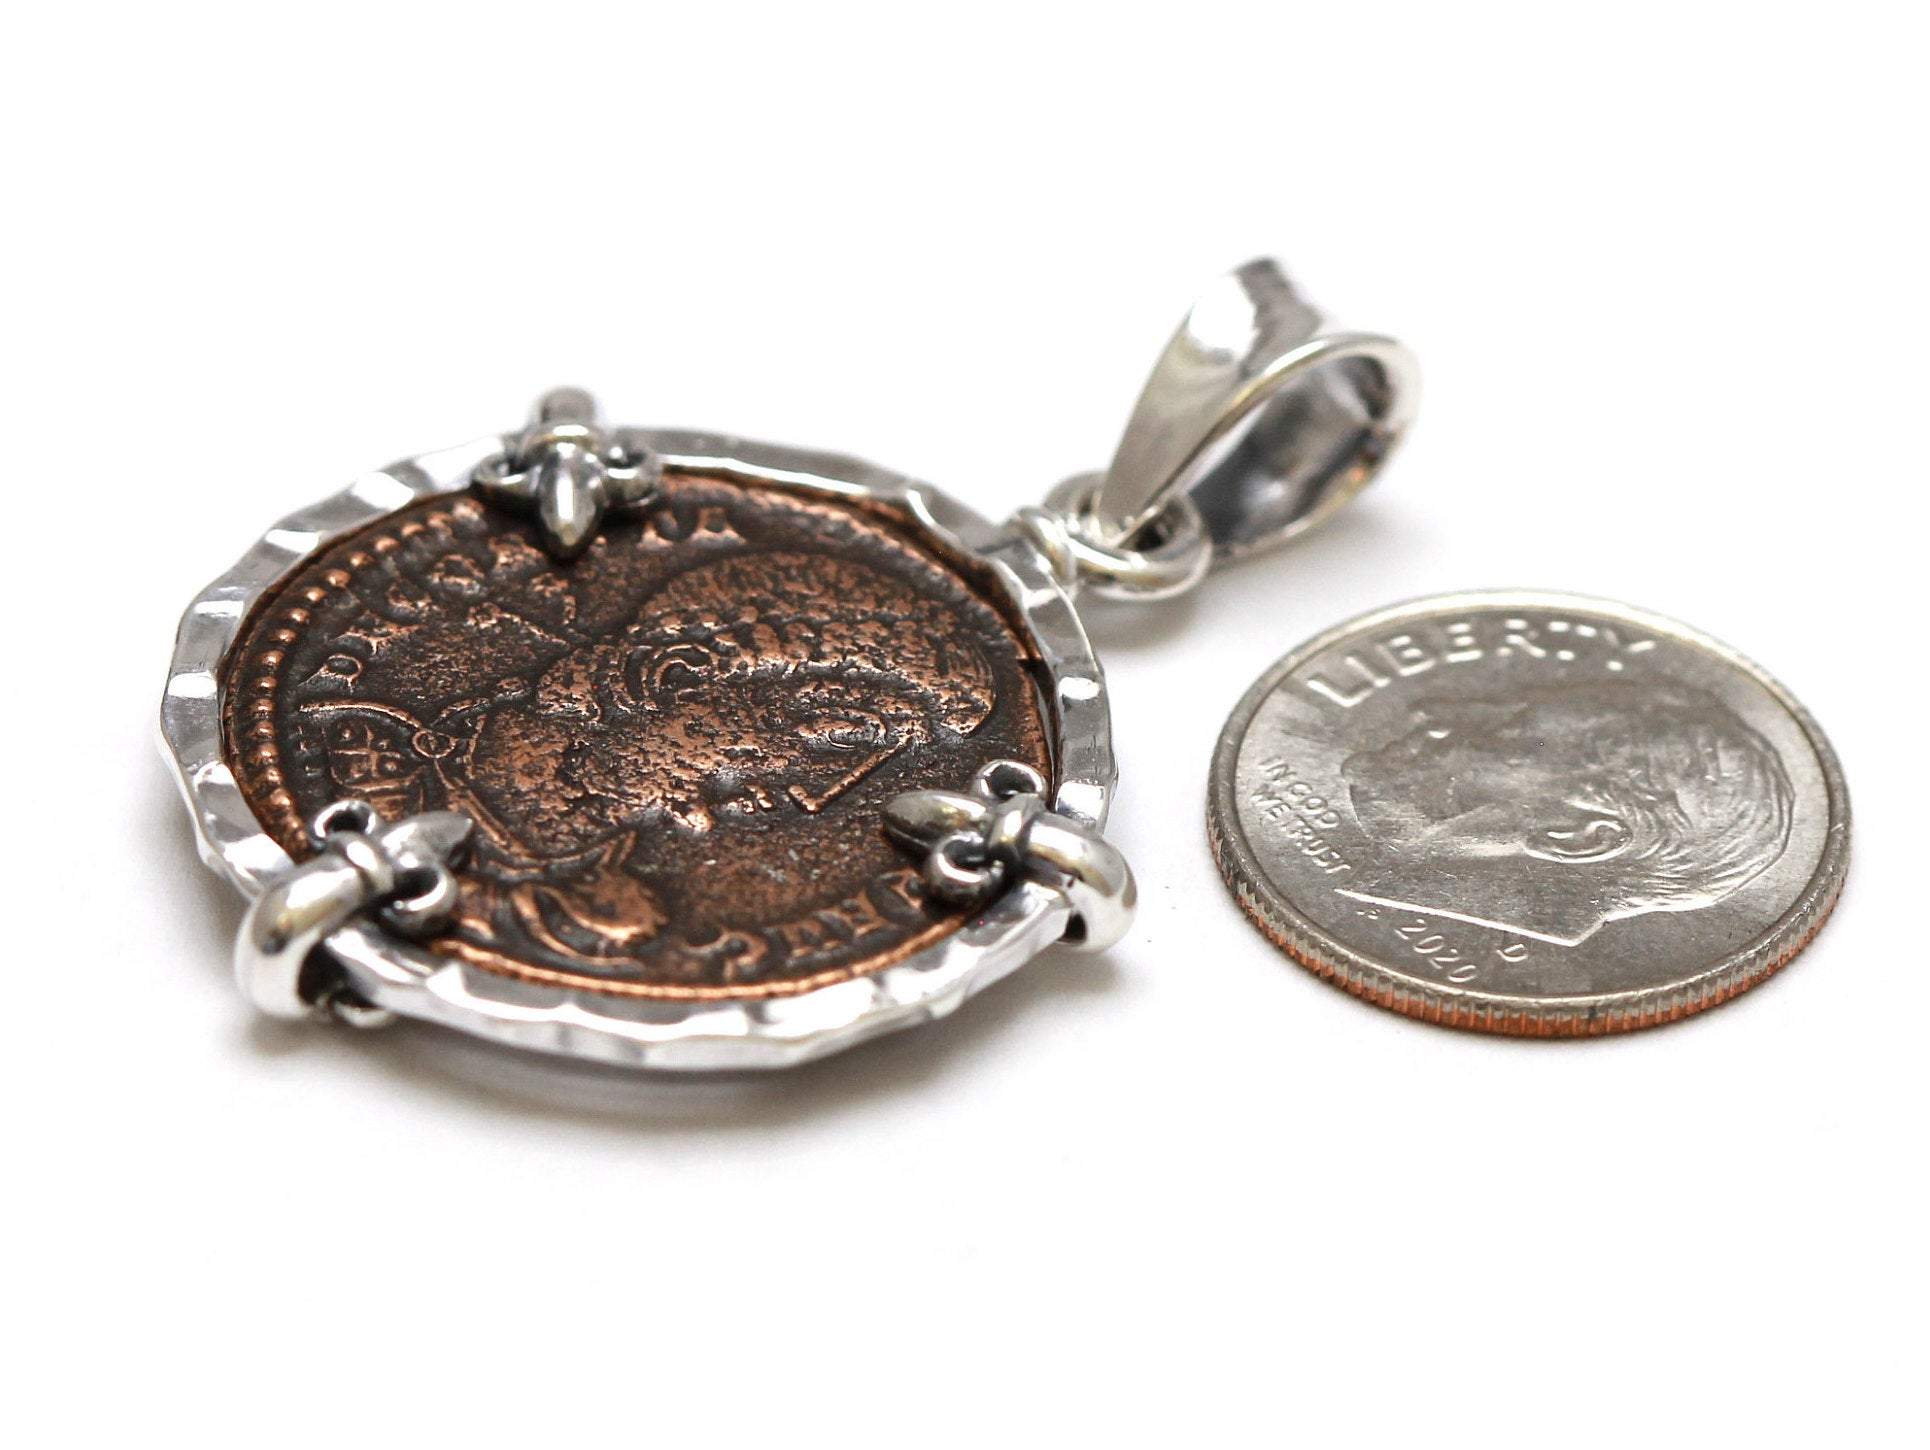 Sterling Silver Pendant, Constantius II, 7103